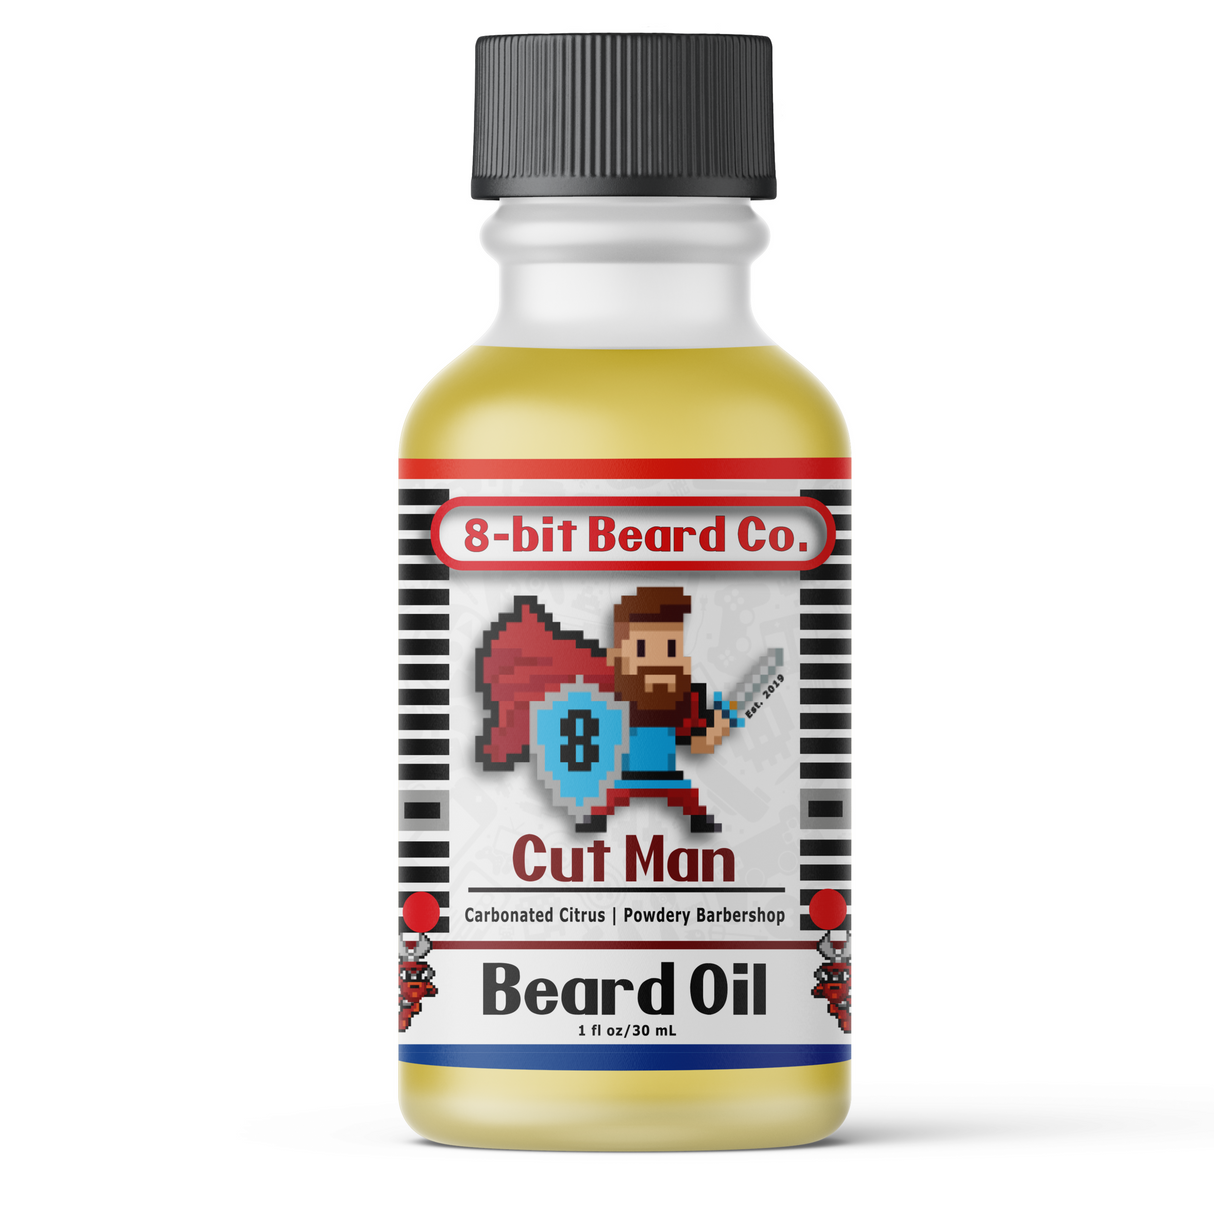 Cut Man | Beard Oil - Carbonated Citrus Barbershop